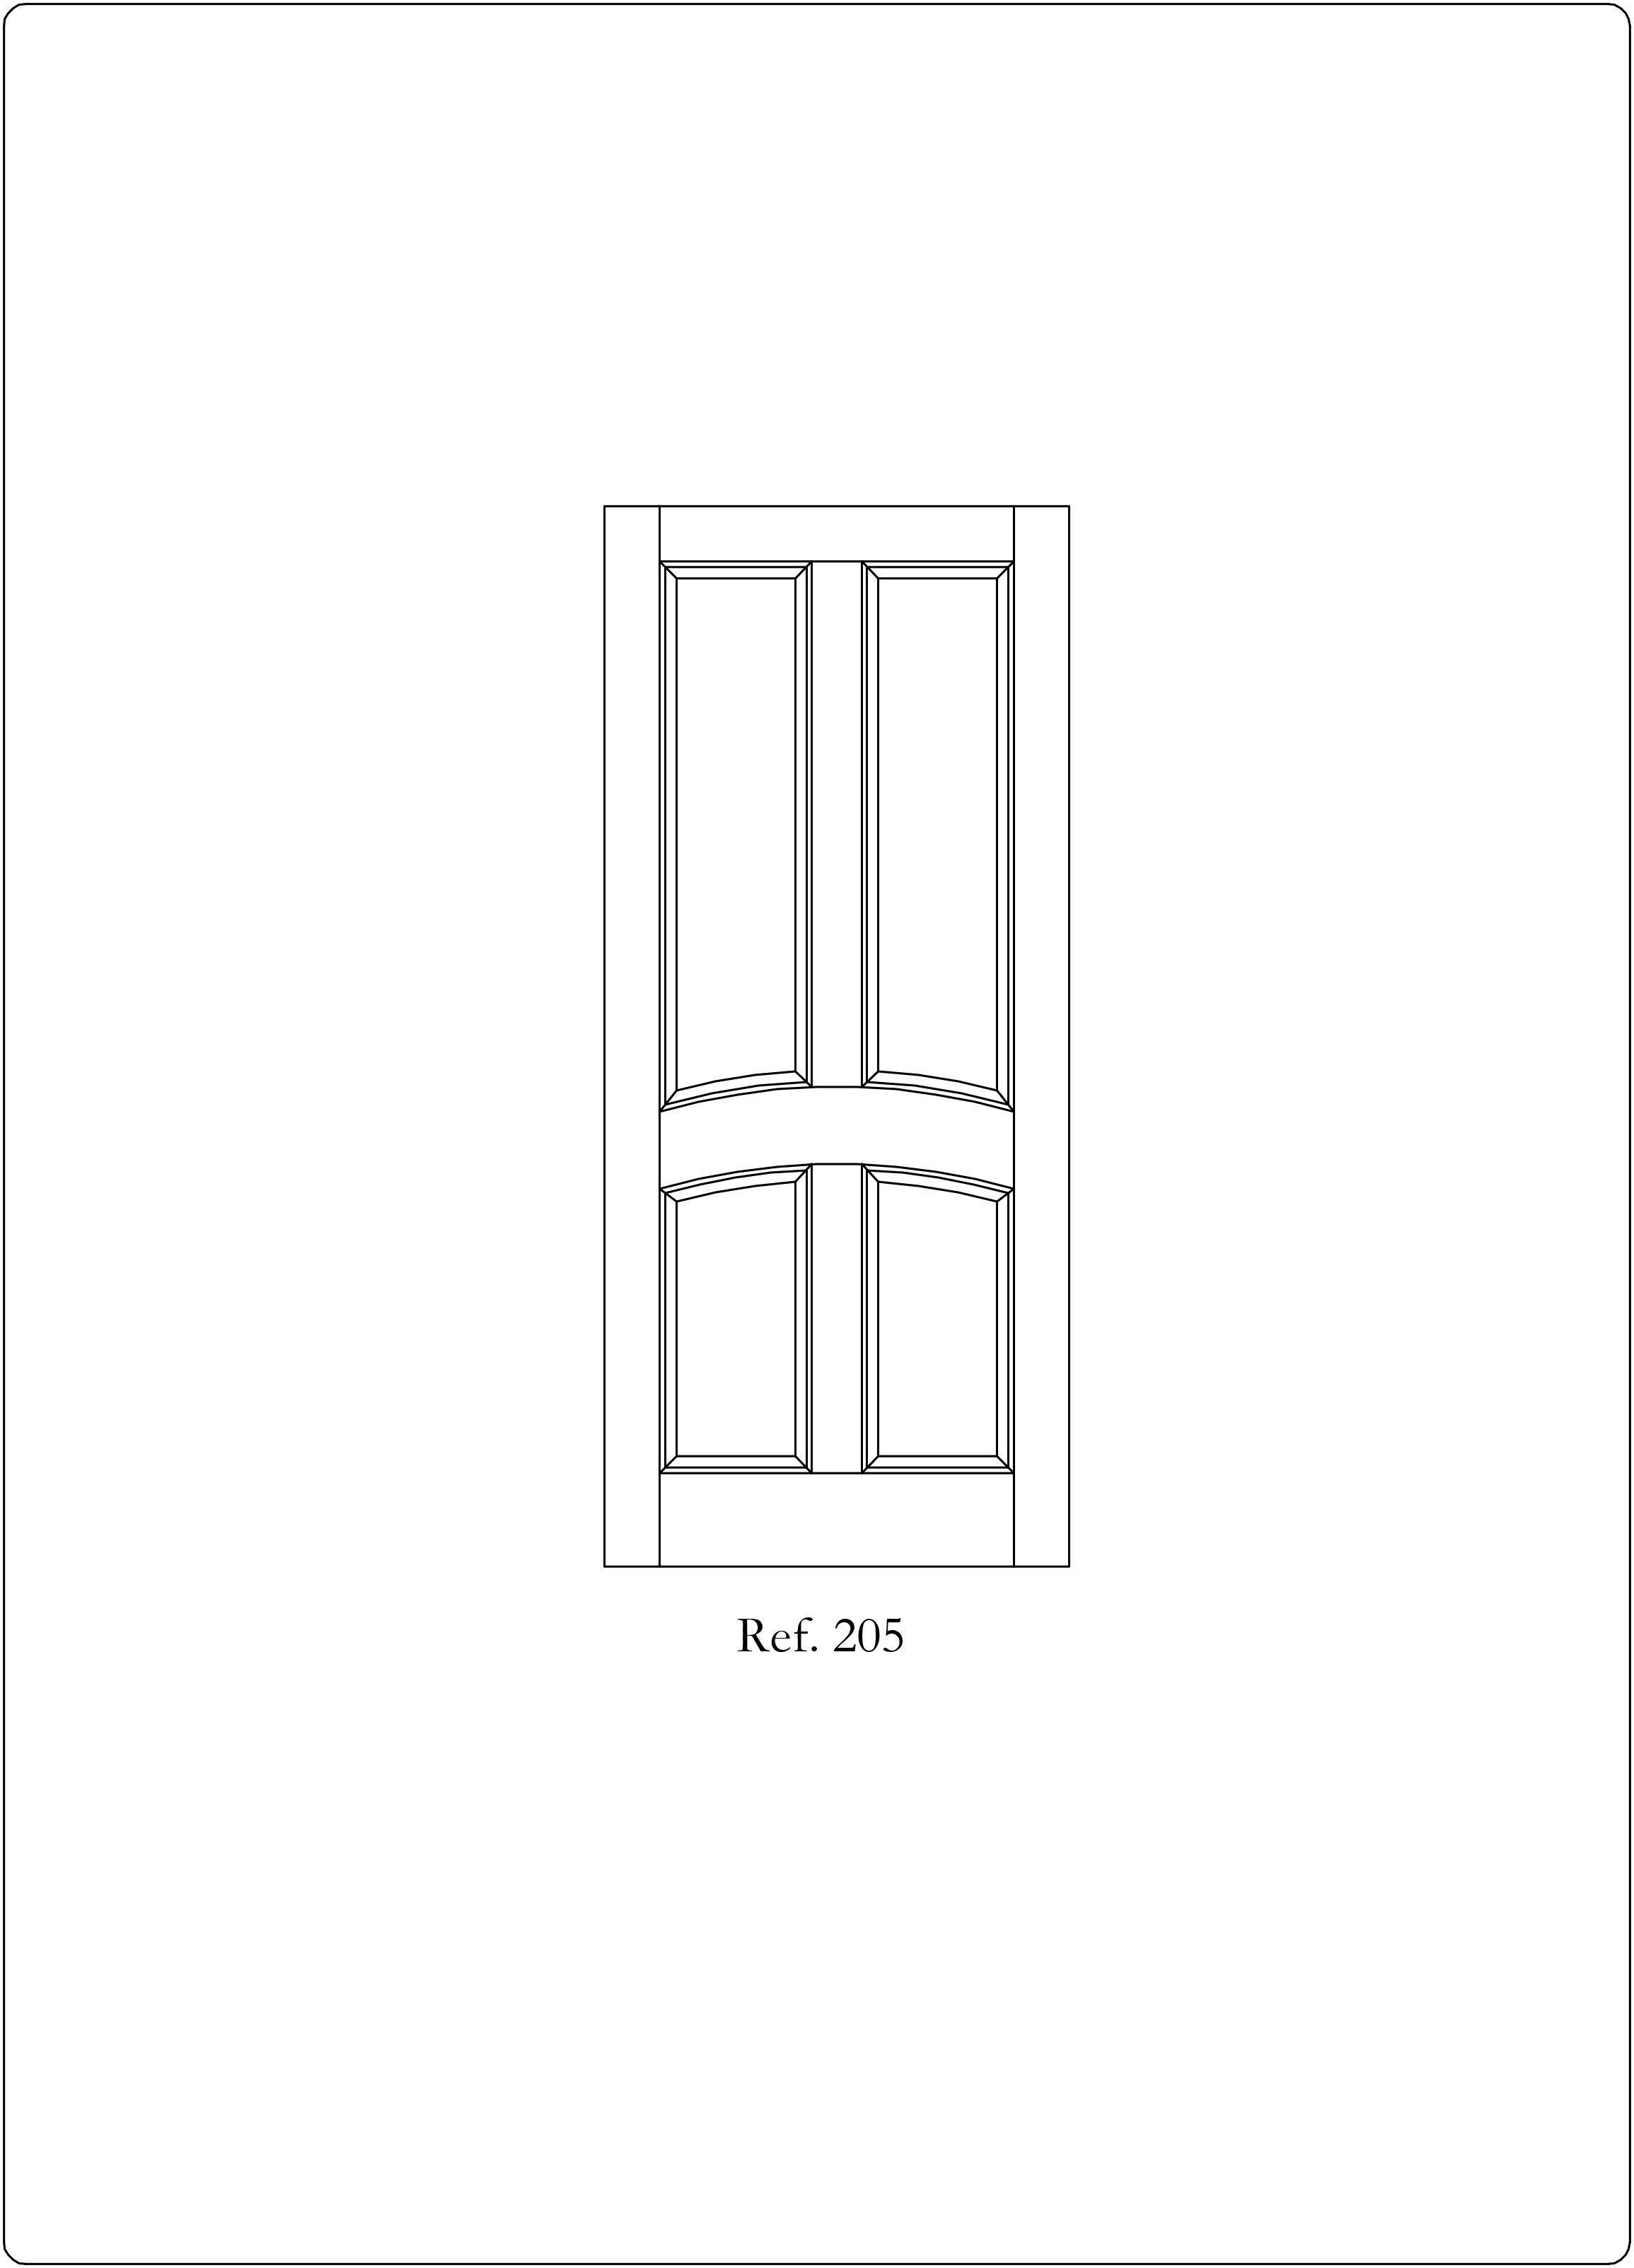 Design Shop Drawings - Stilewood International Doors and Windows